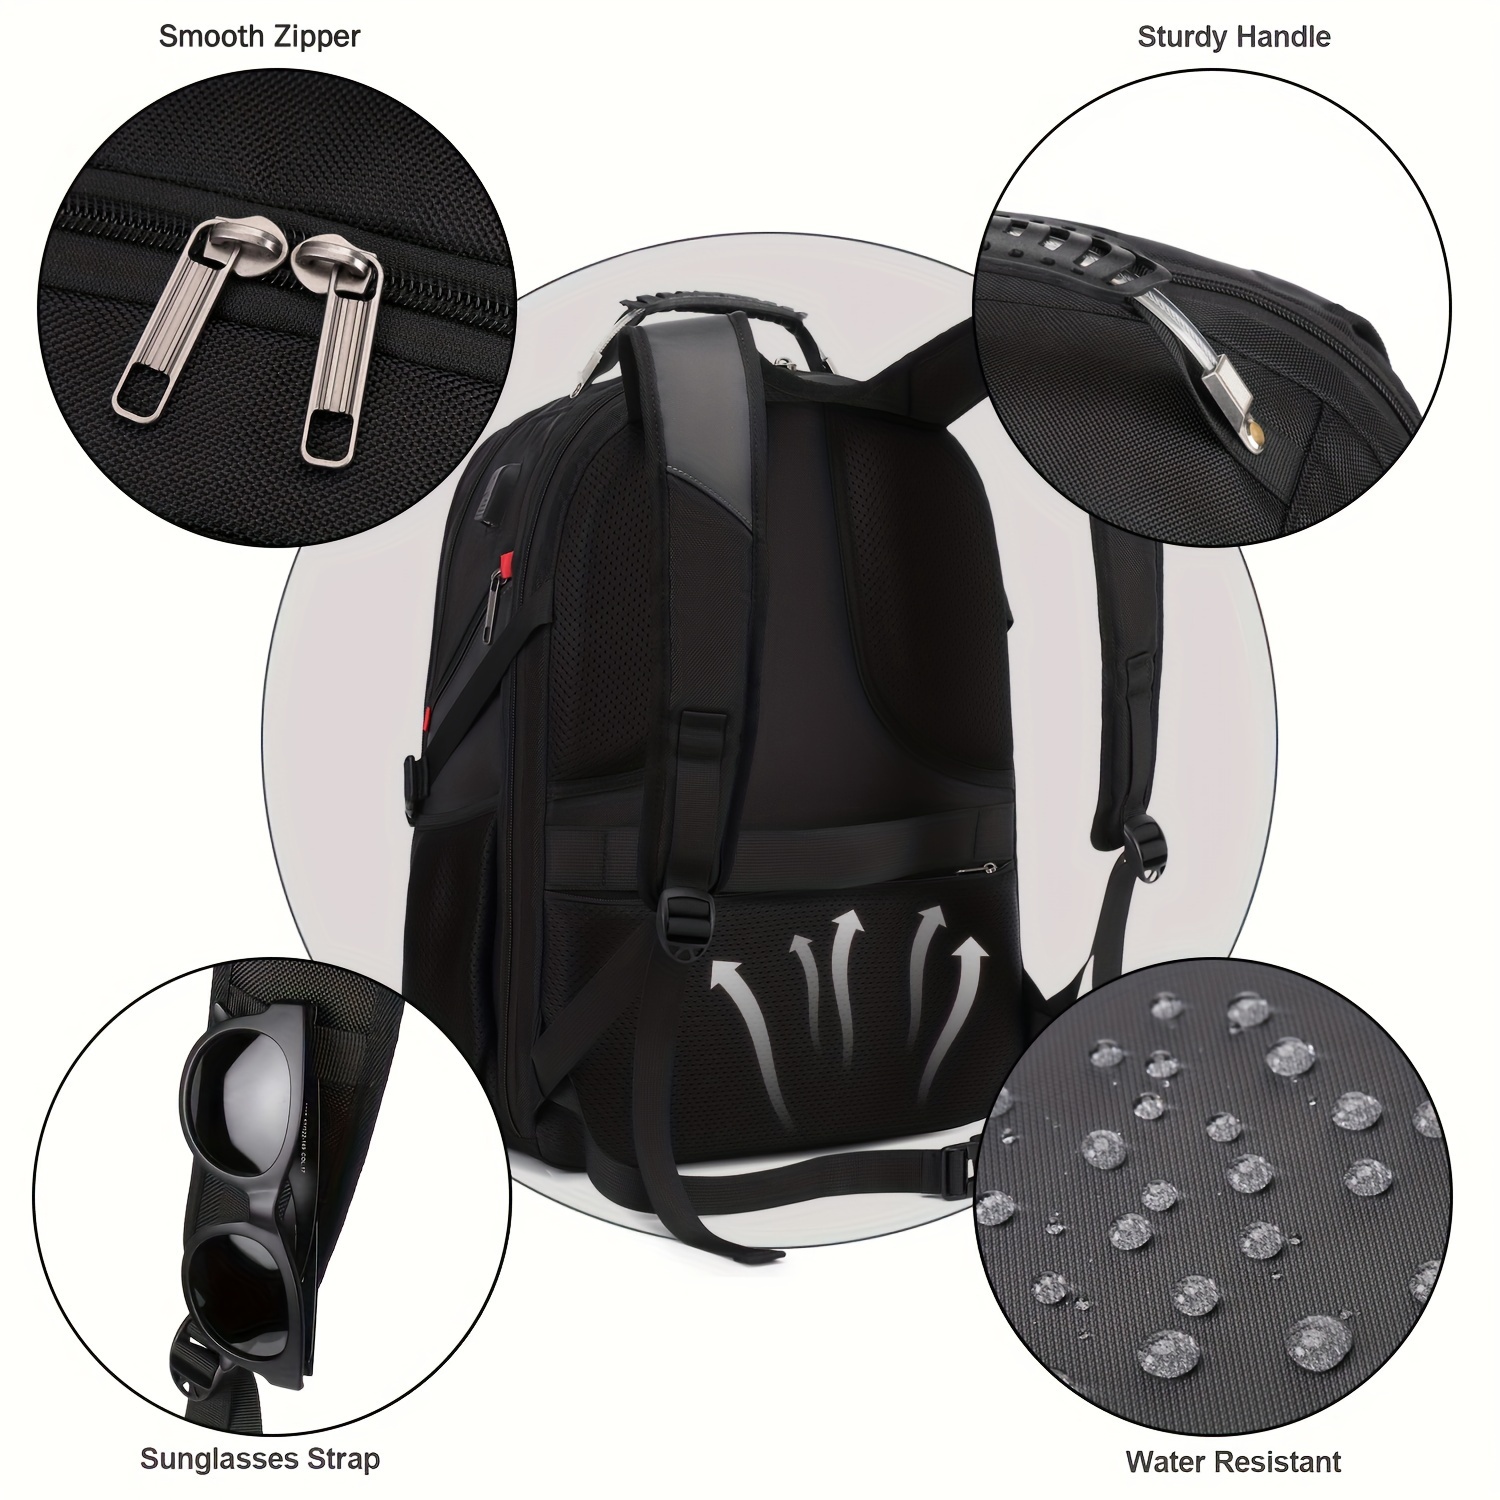 large capacity travel backpack unisex zipper laptop backpack college bookbag business work storage rucksack